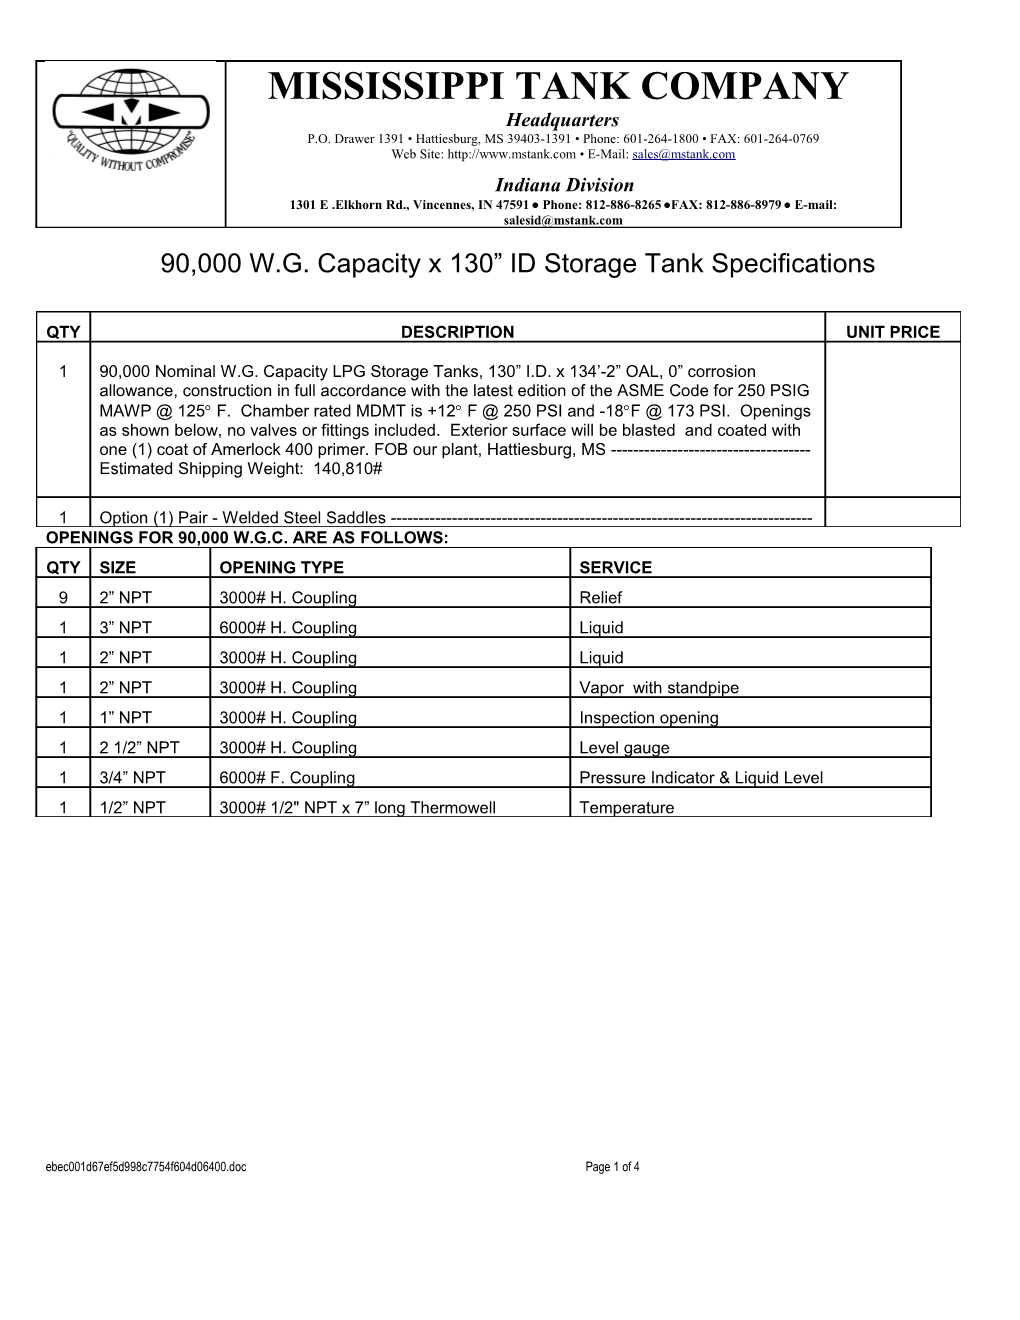 90,000 W.G. Capacity X 130 ID Storage Tank Specifications